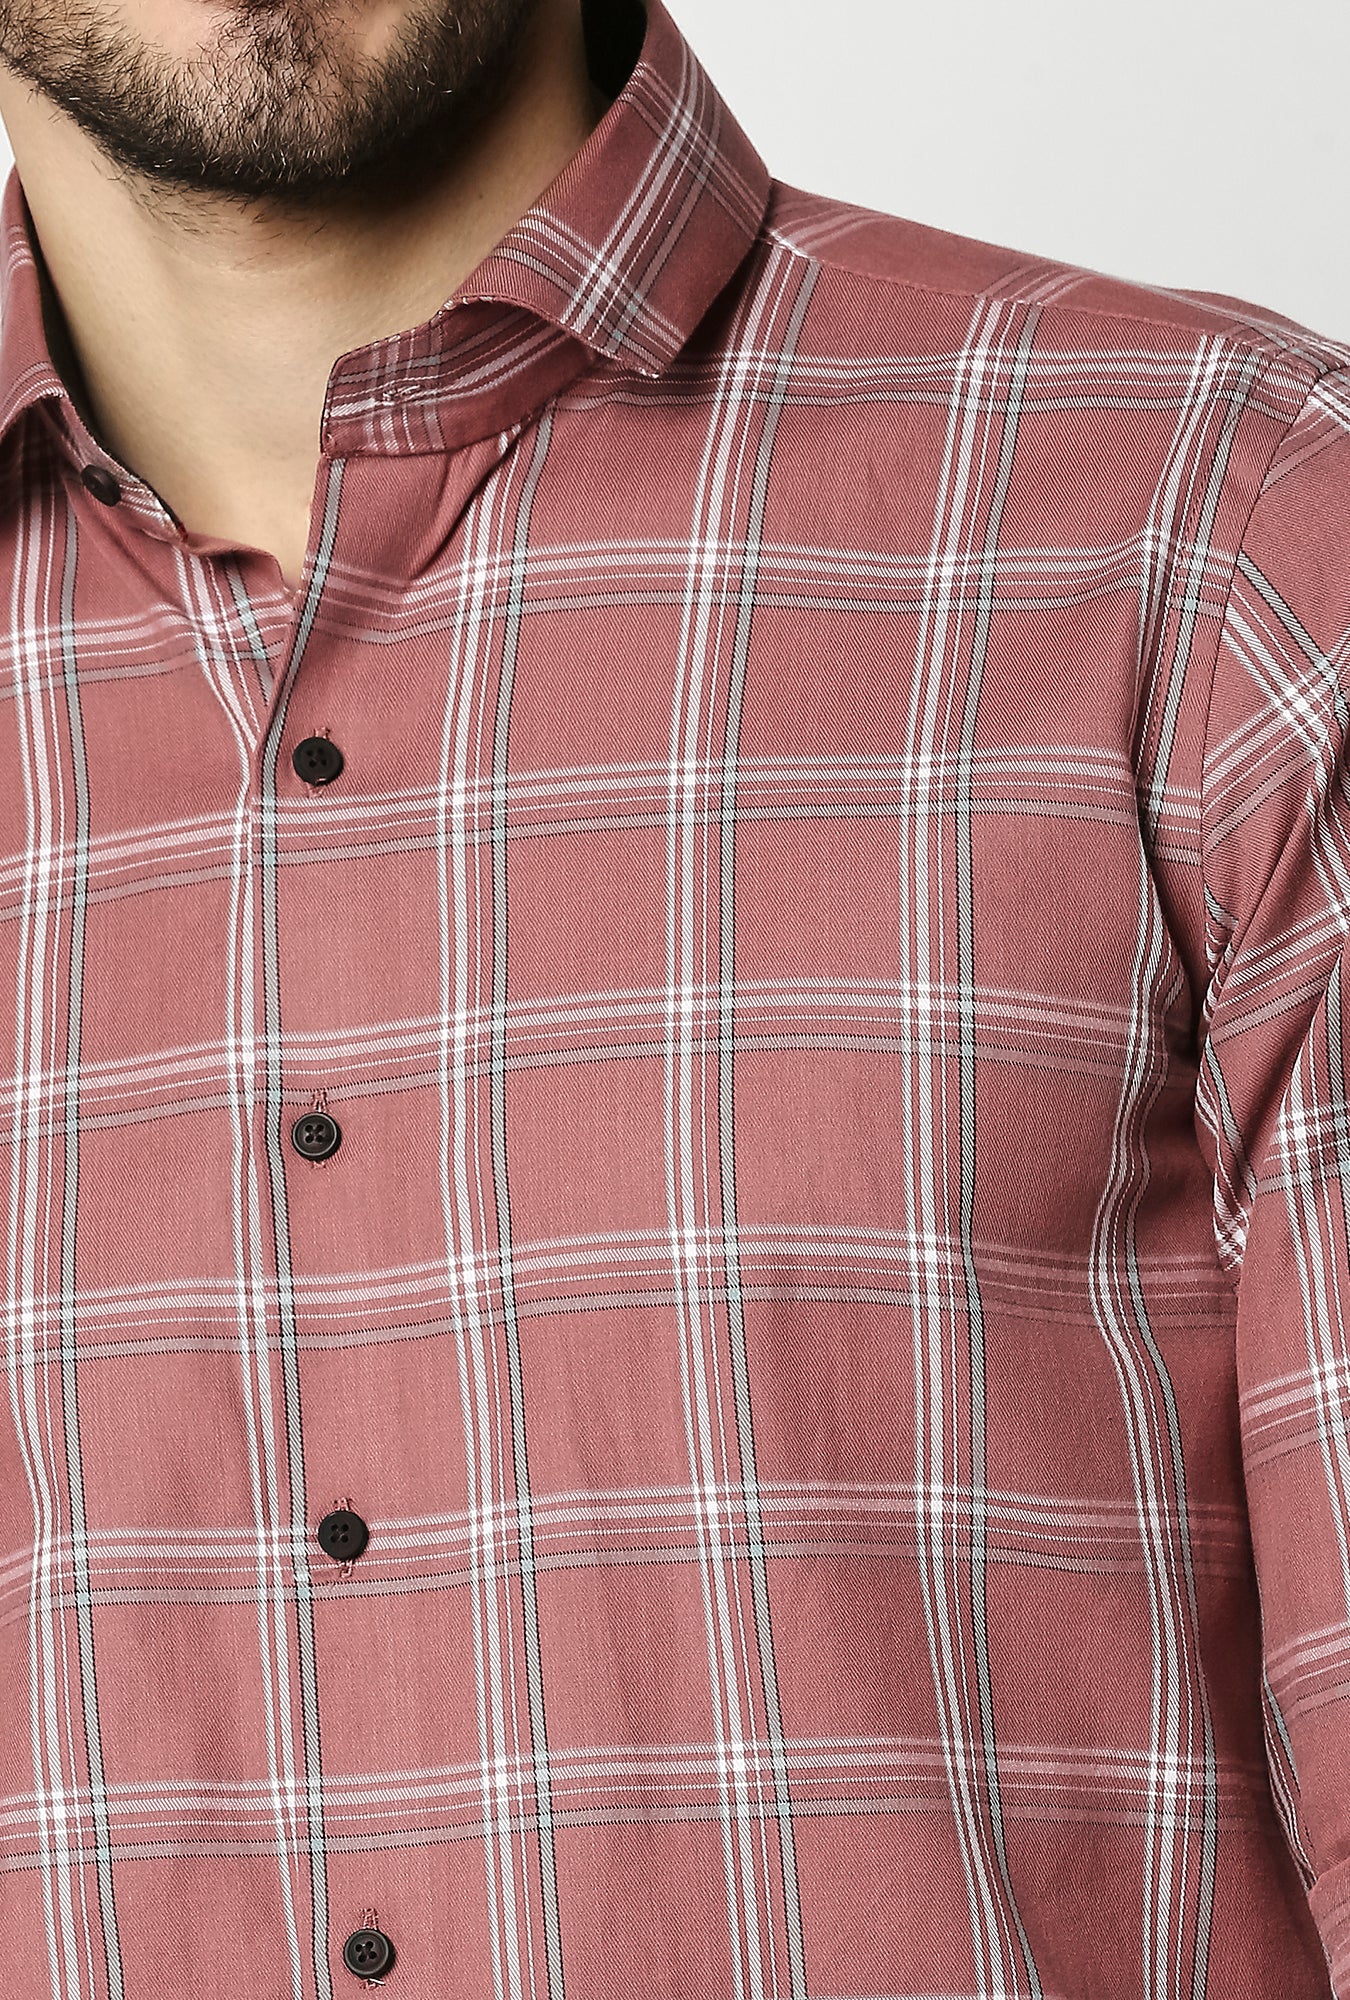 Fostino Checks Red Full Sleeves Shirt - Fostino - Shirts